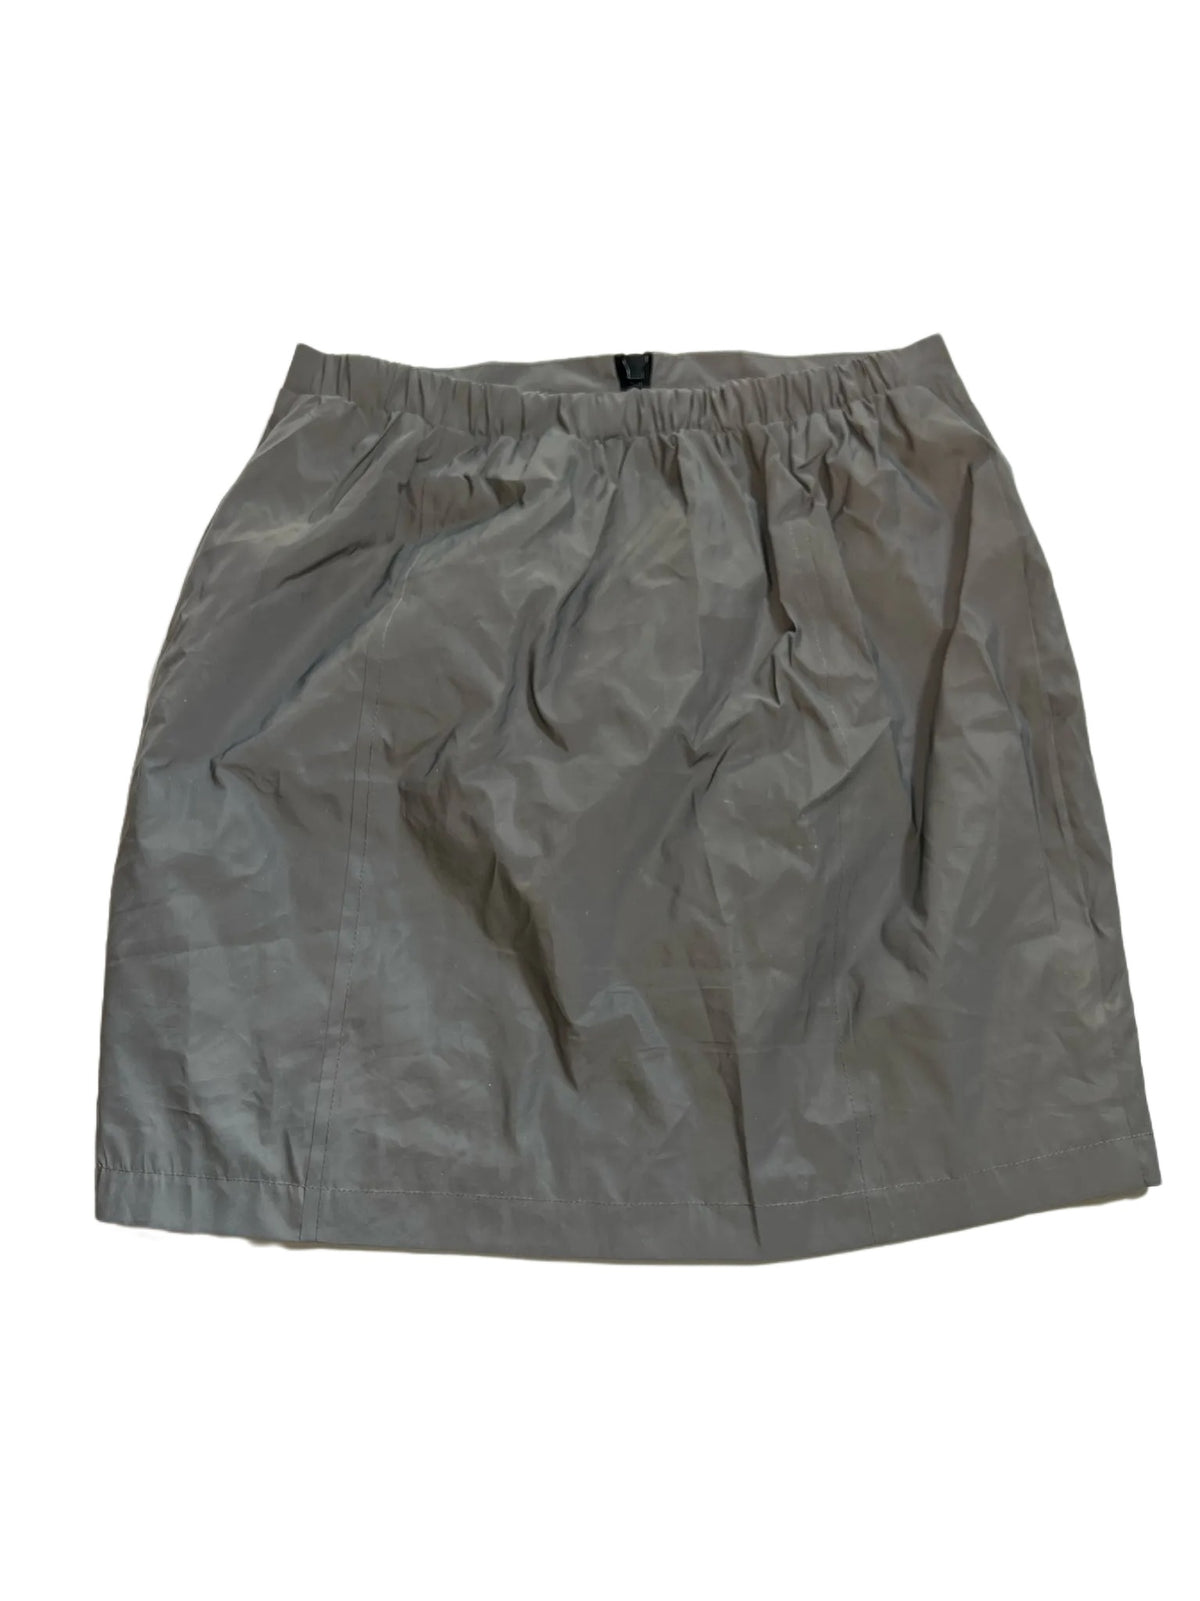 WFFS- Reflective Silver Mini Skirt